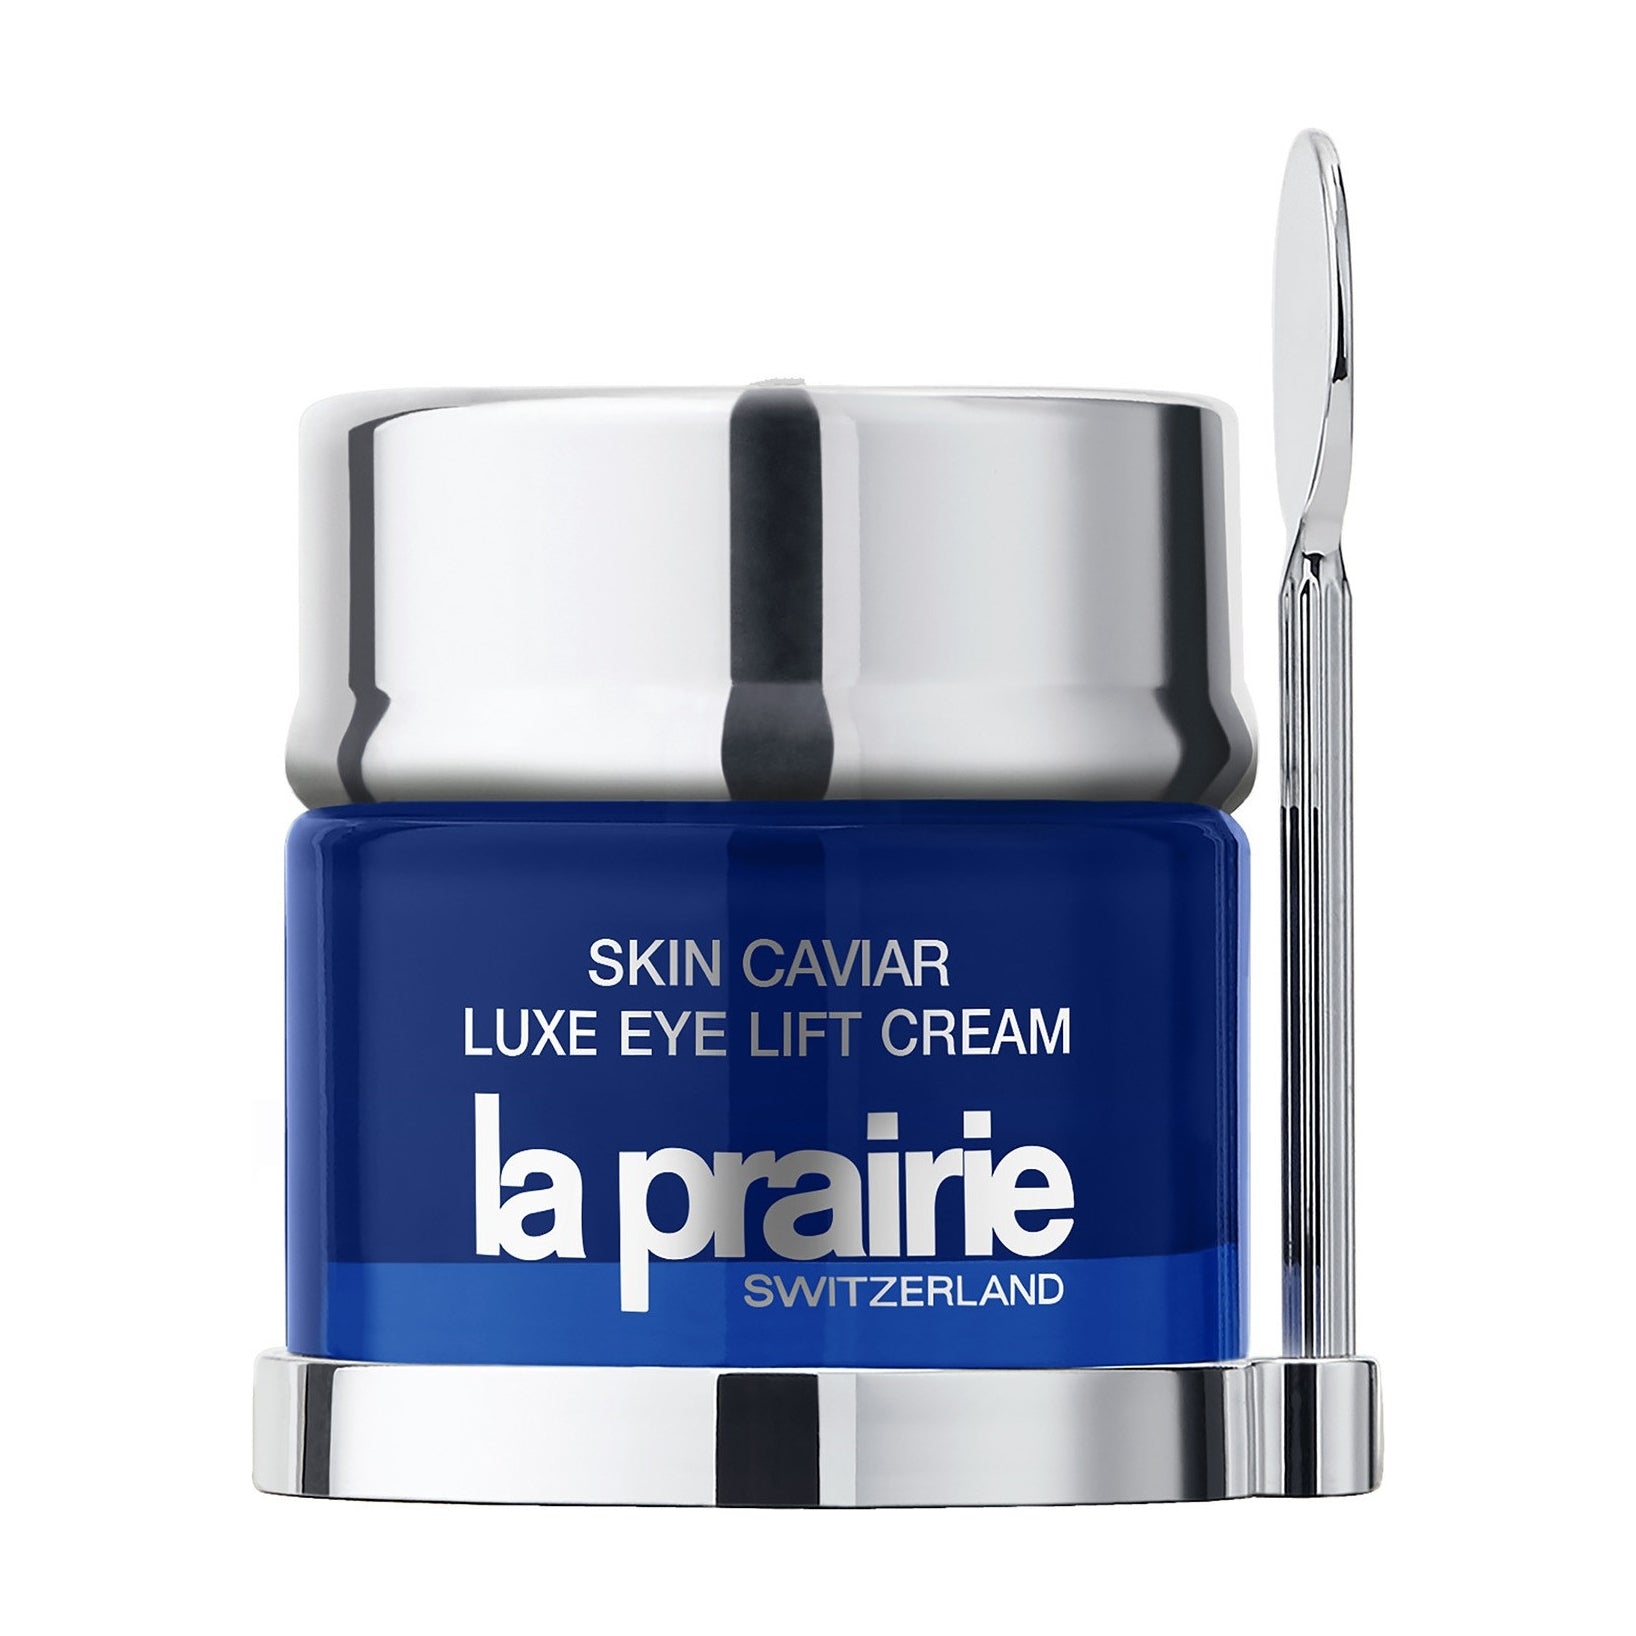 SKIN CAVIAR luxe eye cream premier